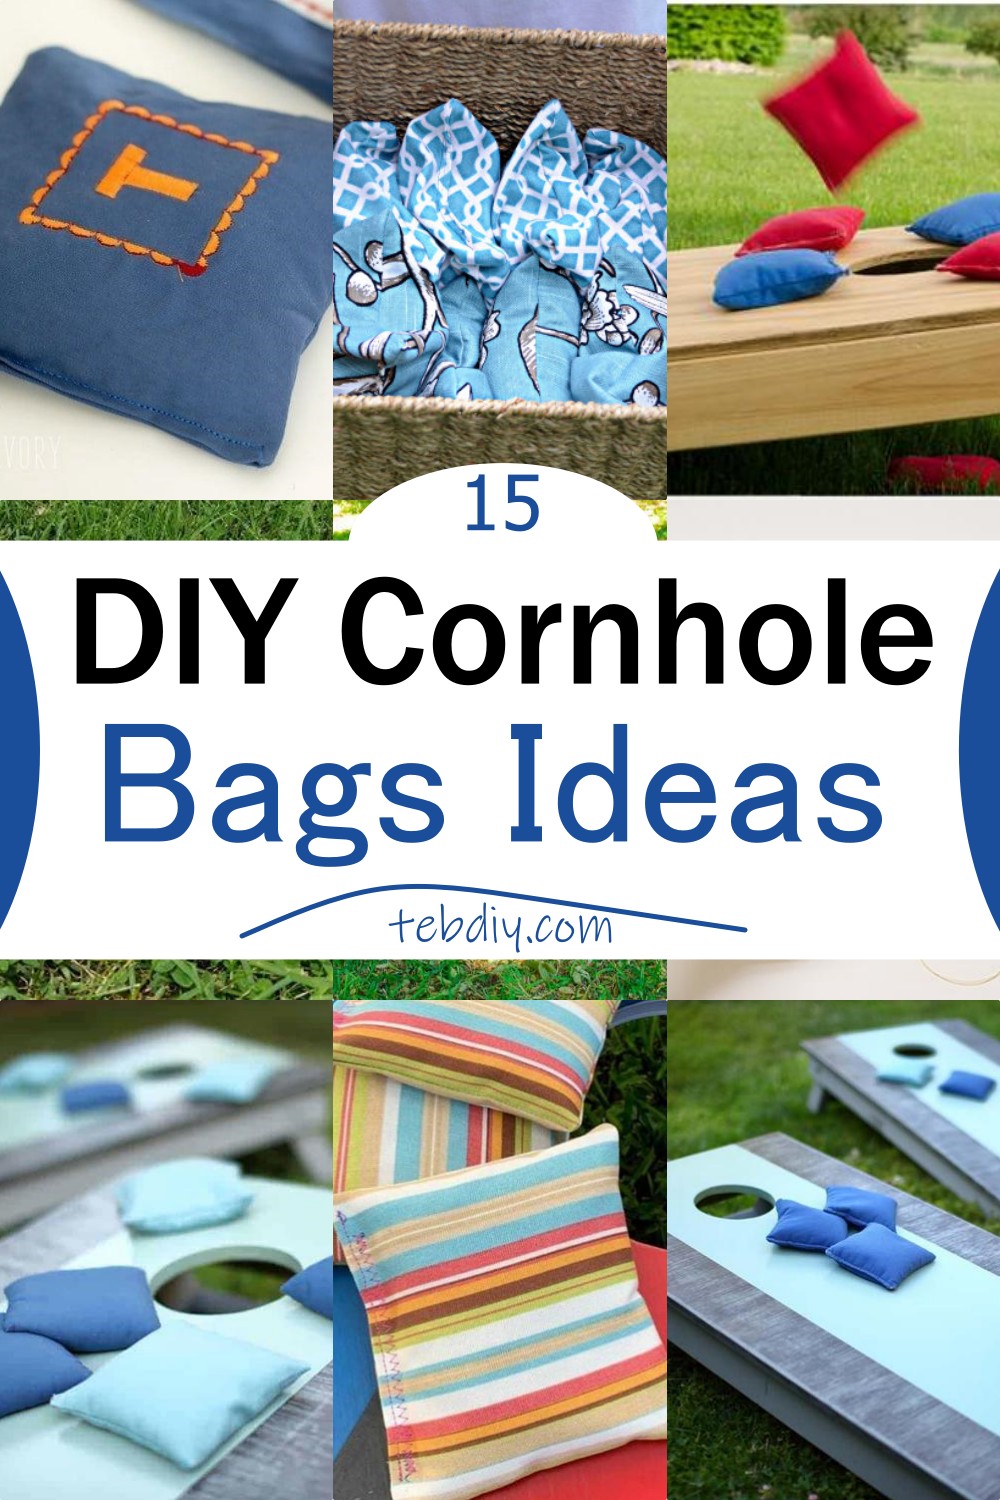 15 DIY Cornhole Bags Ideas